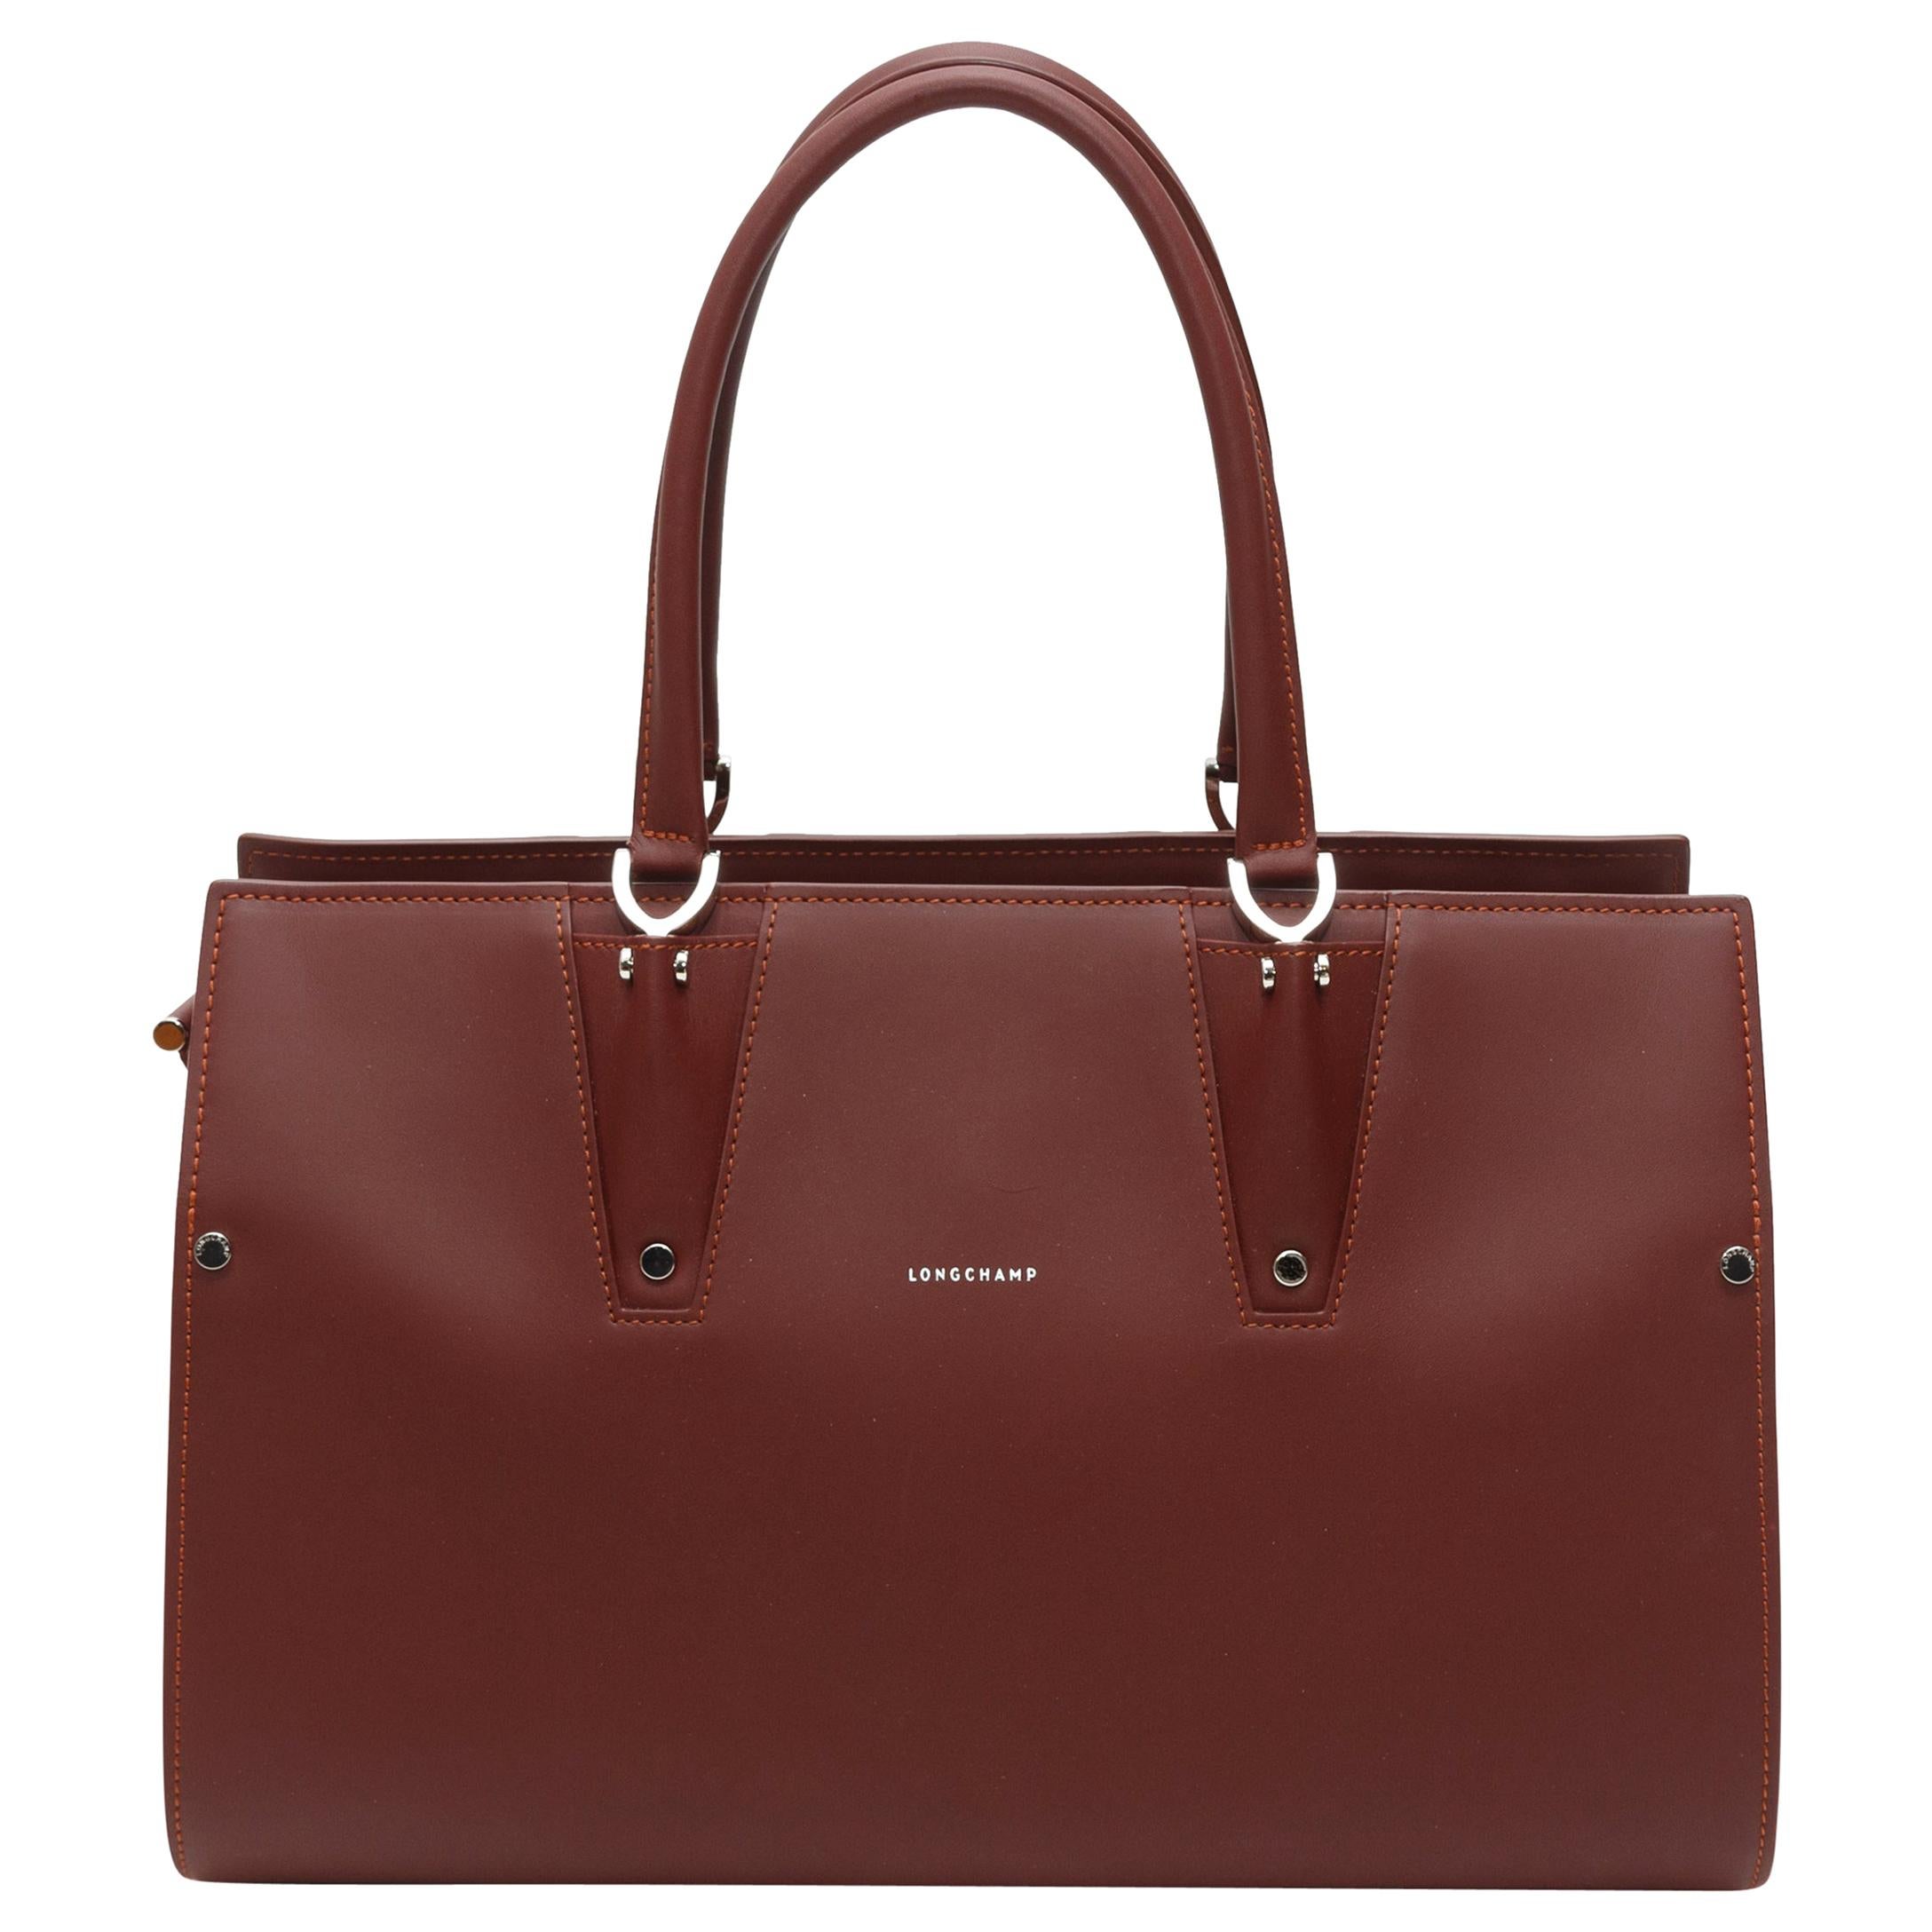 Longchamp Burgundy Leather Handbag